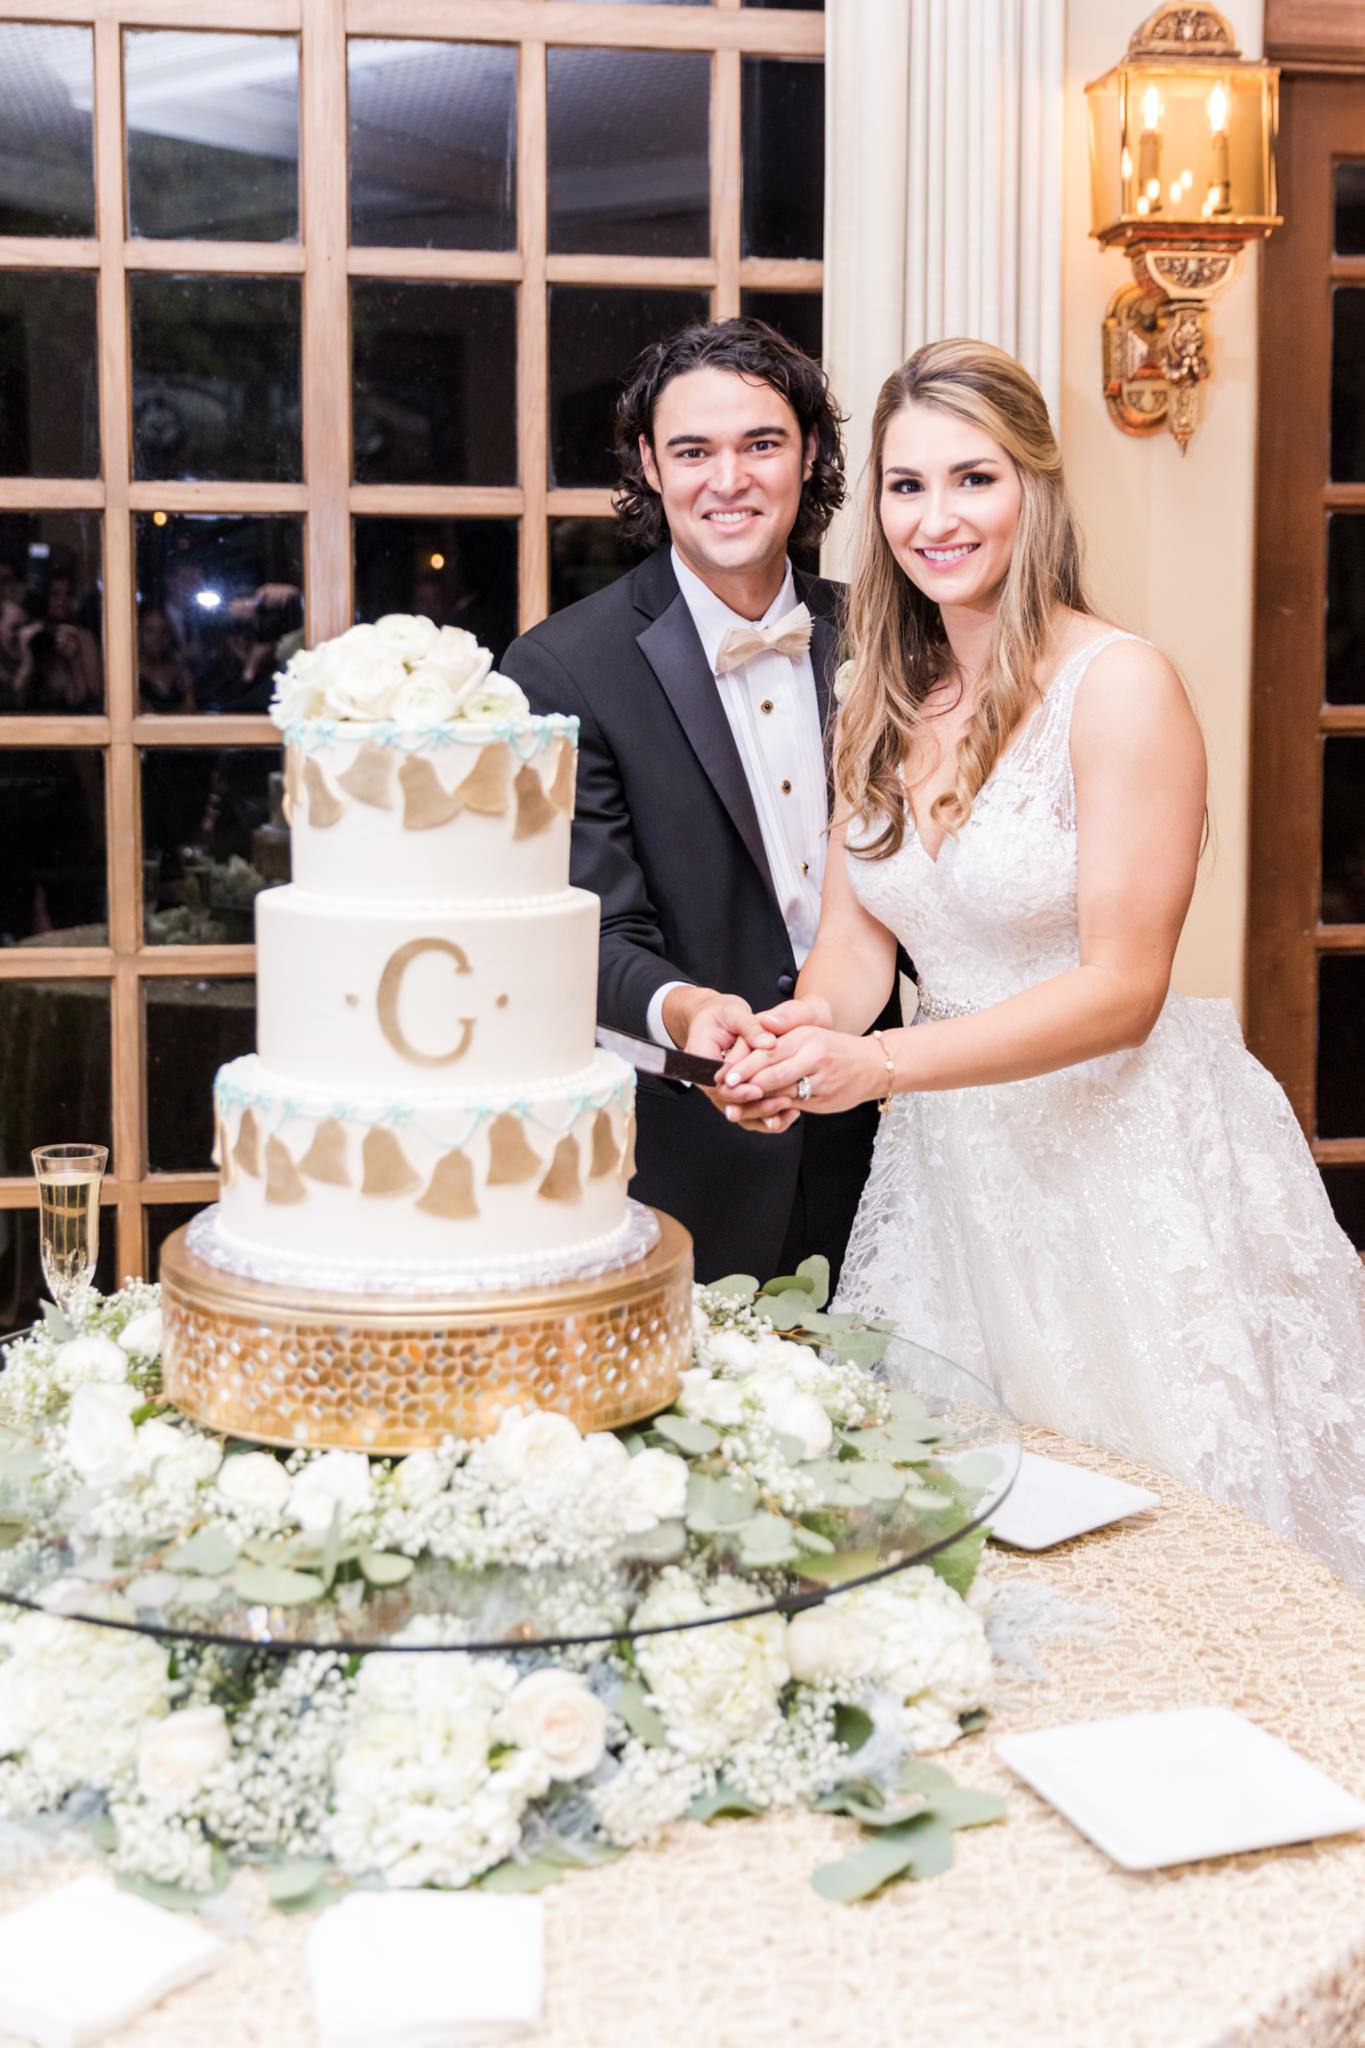 An Ivory and Gold Wedding at The Dominion Country Club by Dawn Elizabeth Studios, San Antonio Wedding Photographer